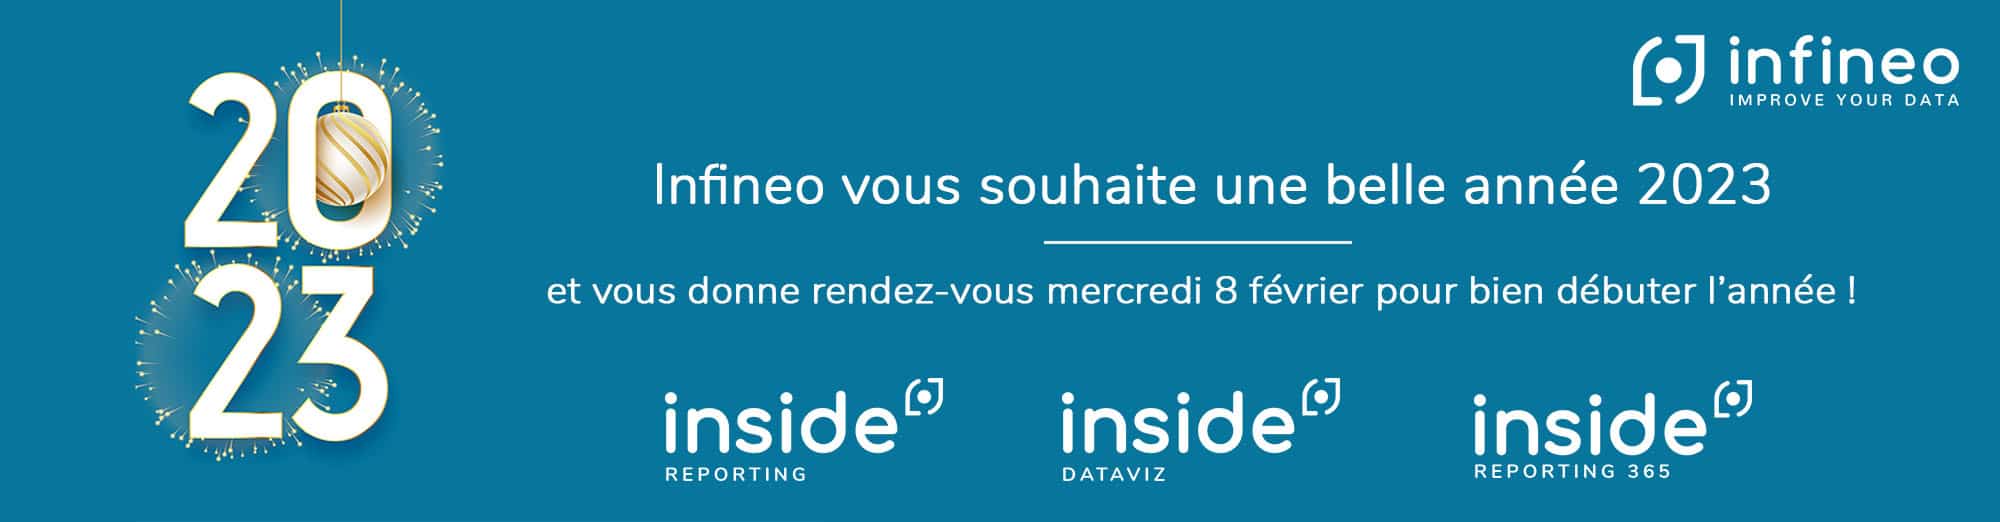 Infineo_Inside reporting Inside dataviz_voeux 2023